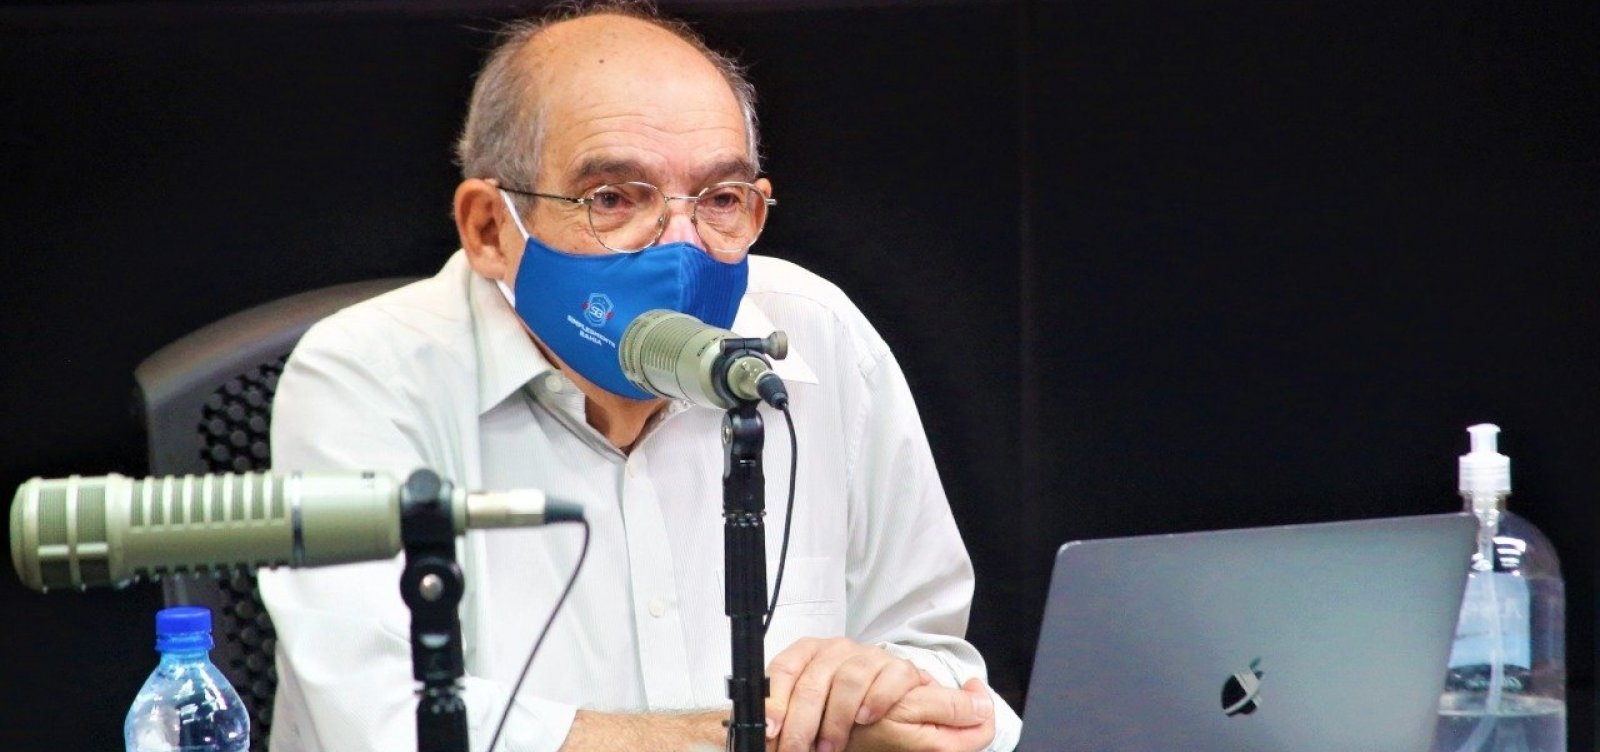 MK repudia proposta de congelamento de aposentadorias: 'O que Paulo Guedes pensa da vida?'